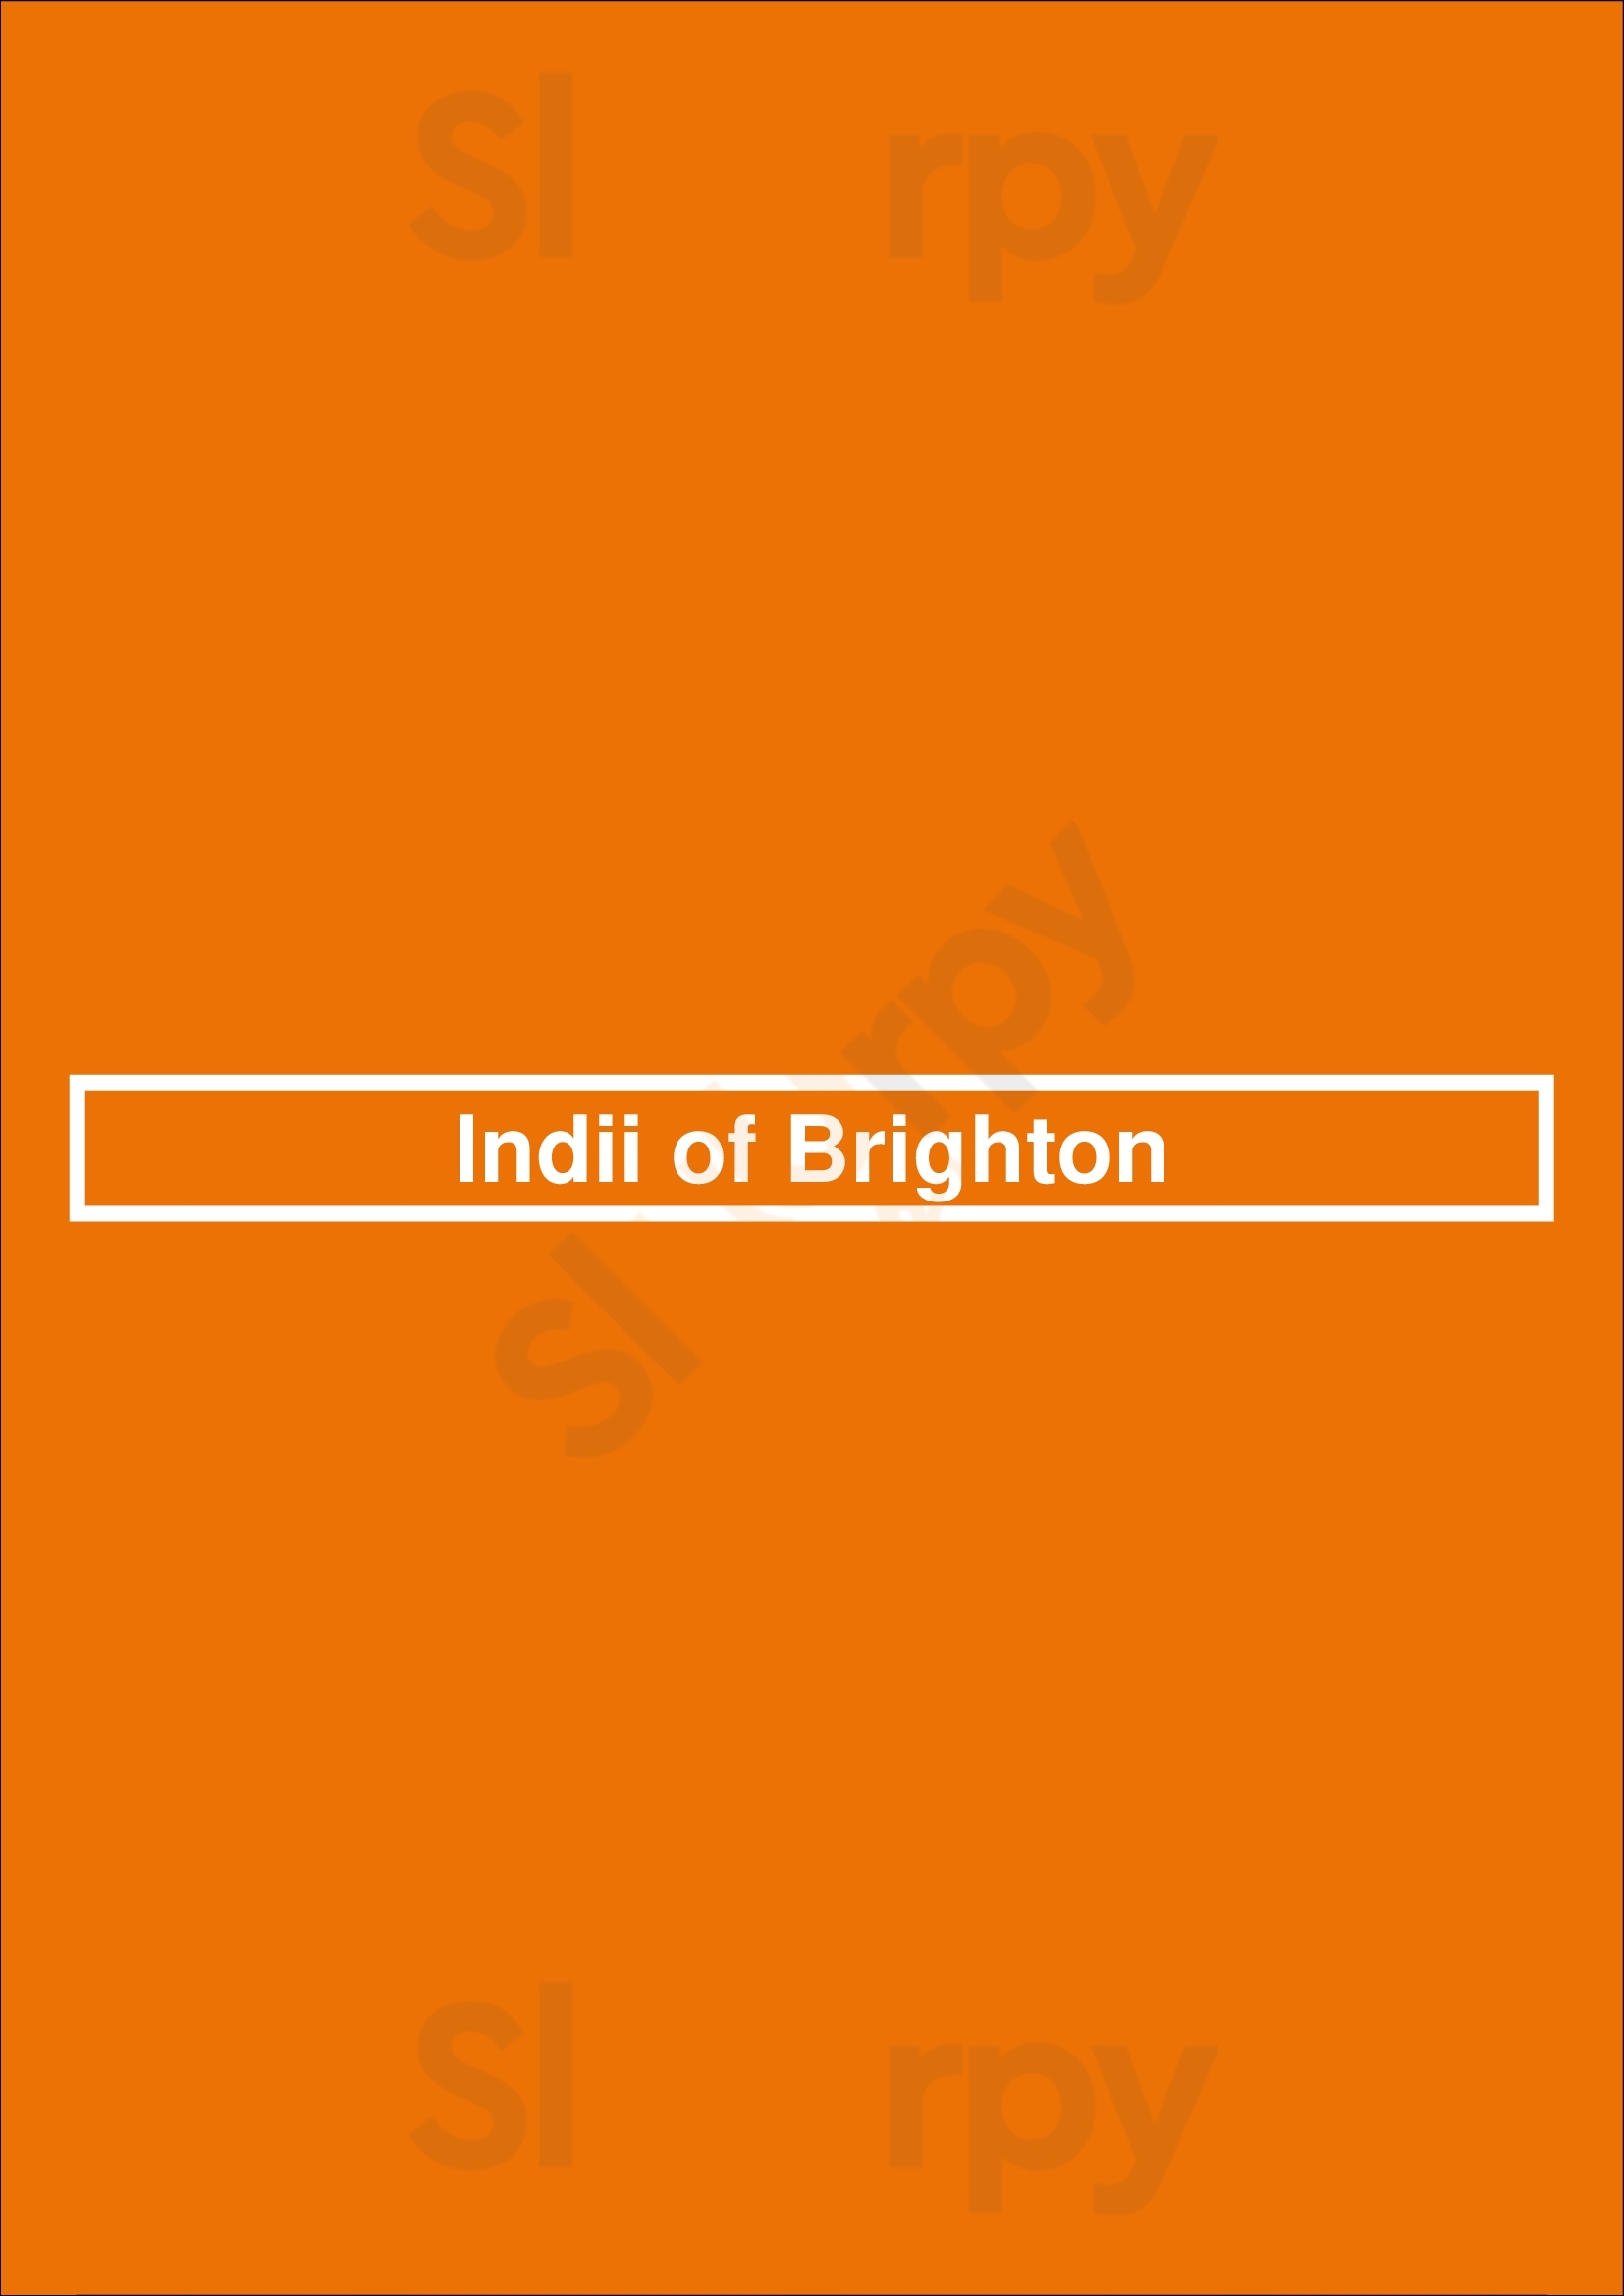 Indii Of Brighton Brighton Menu - 1